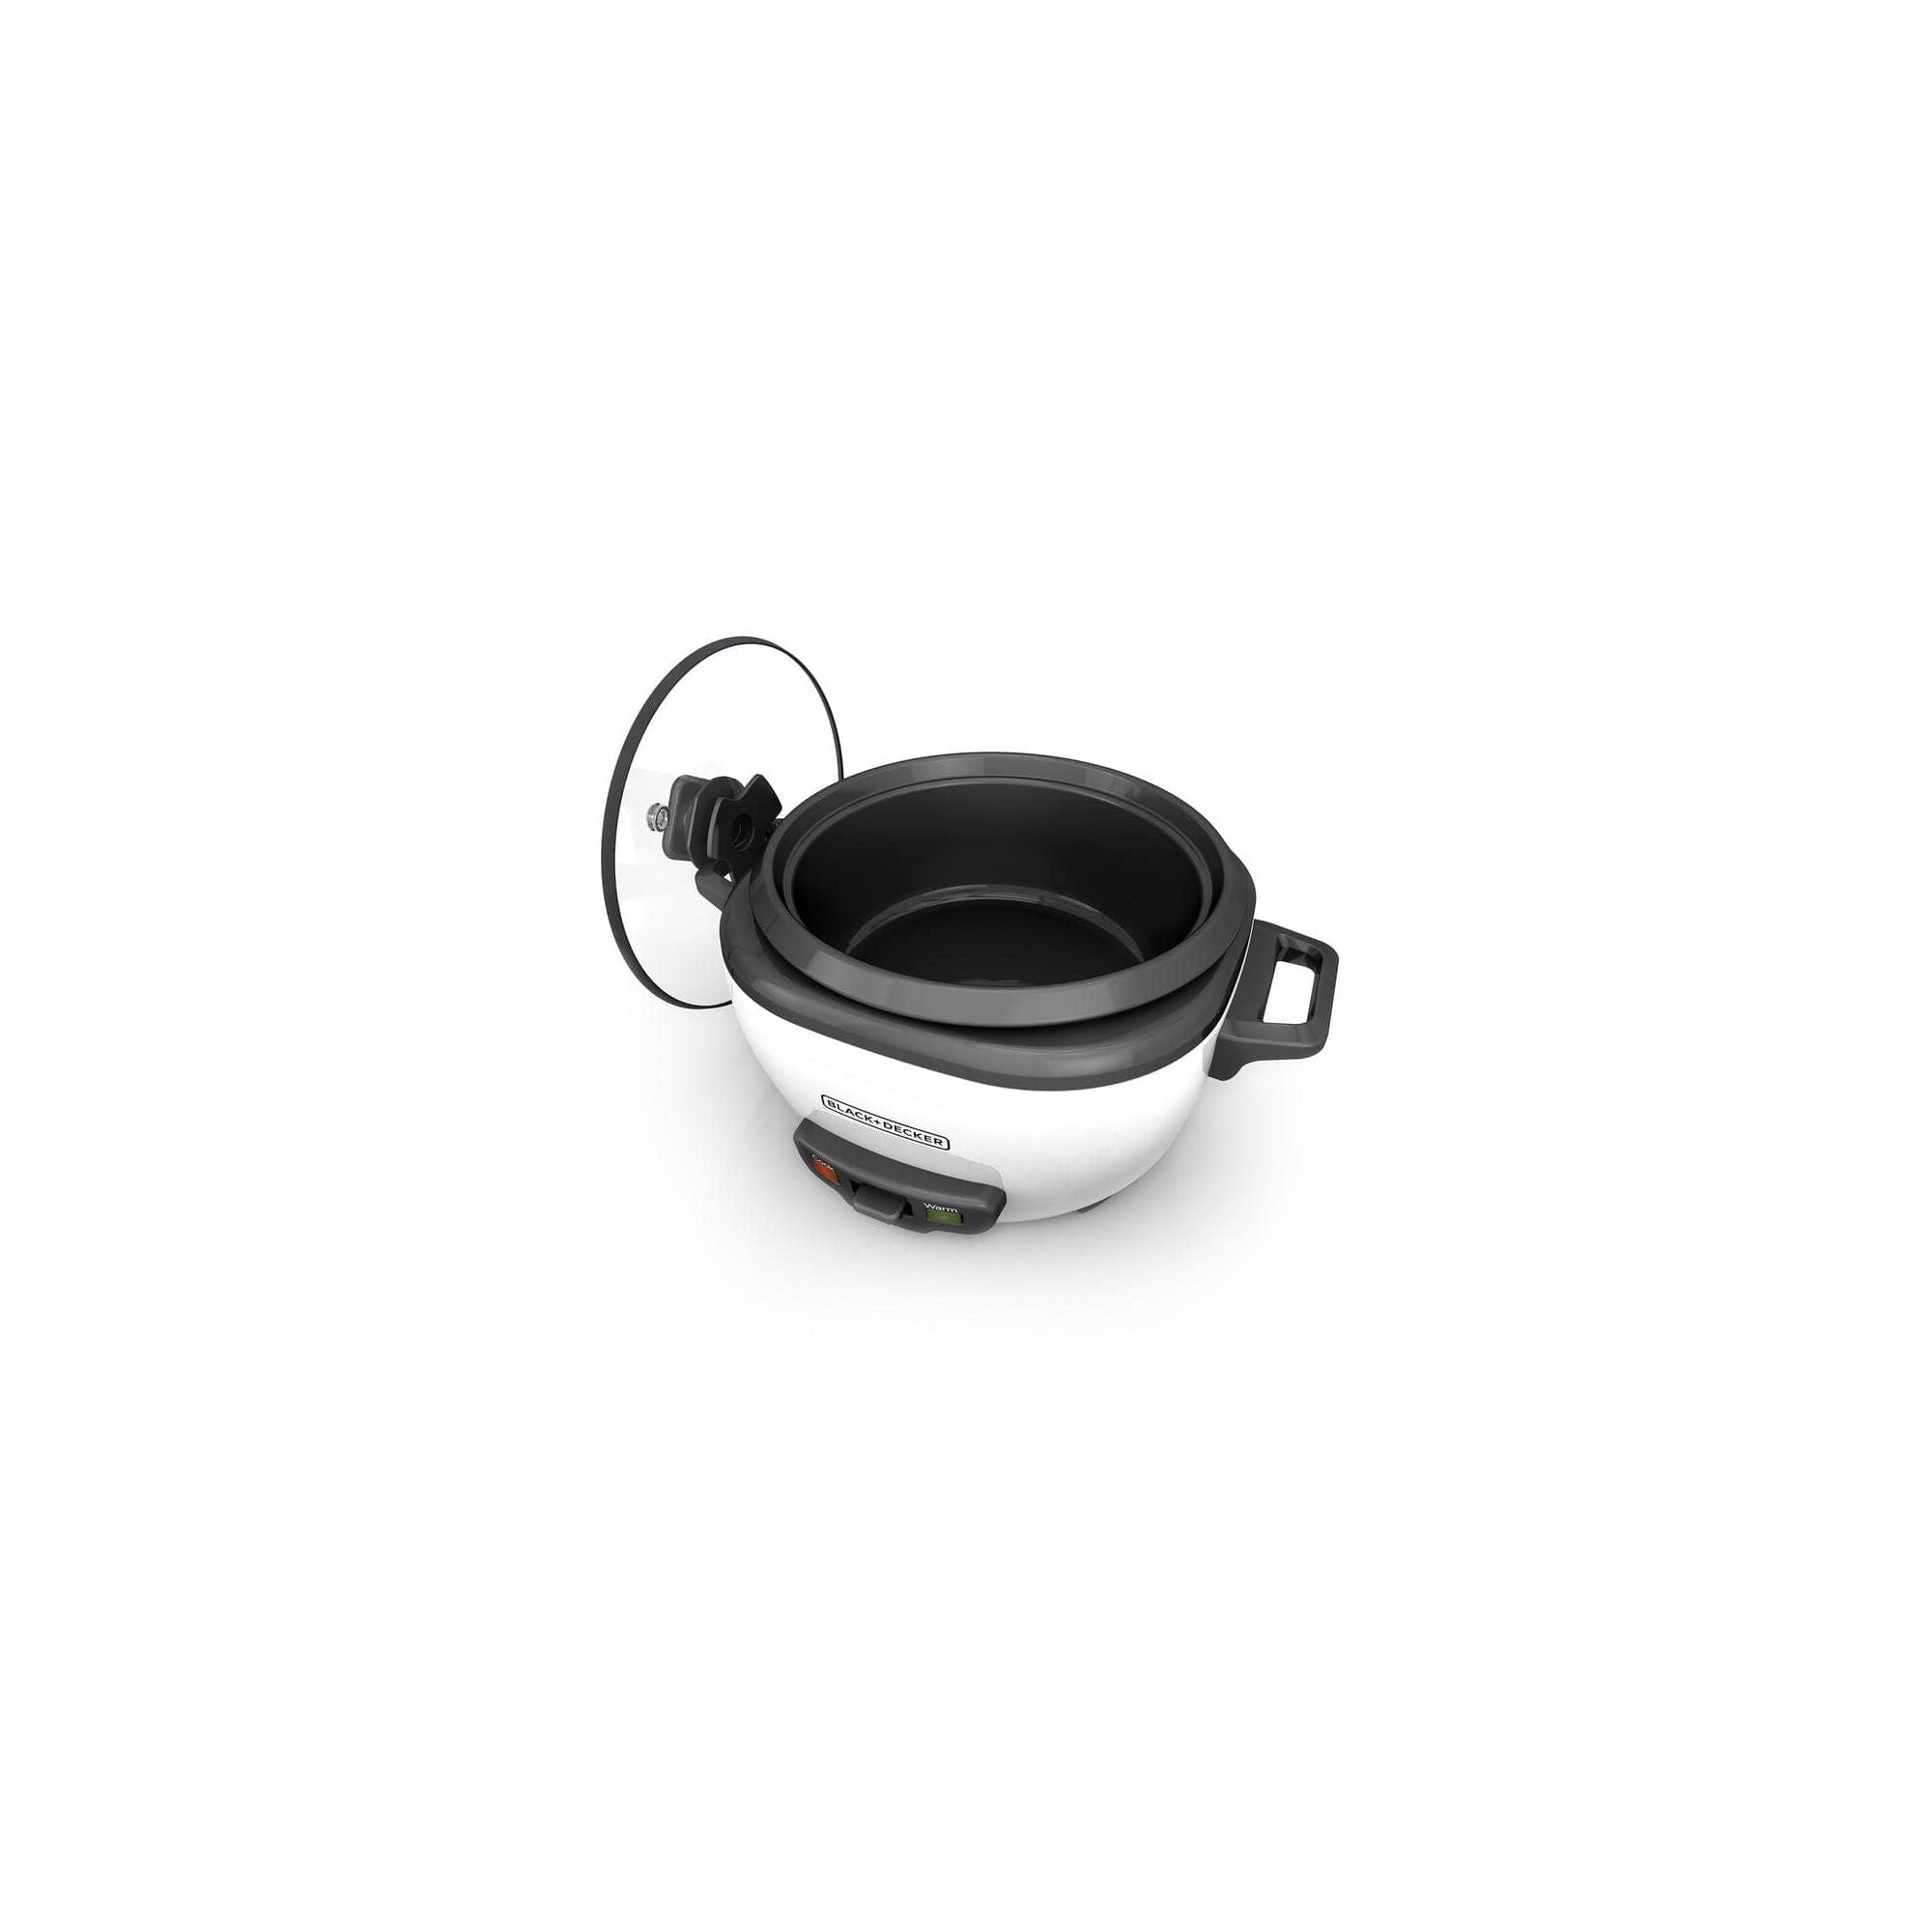 Black+decker 3-Cup Rice Cooker